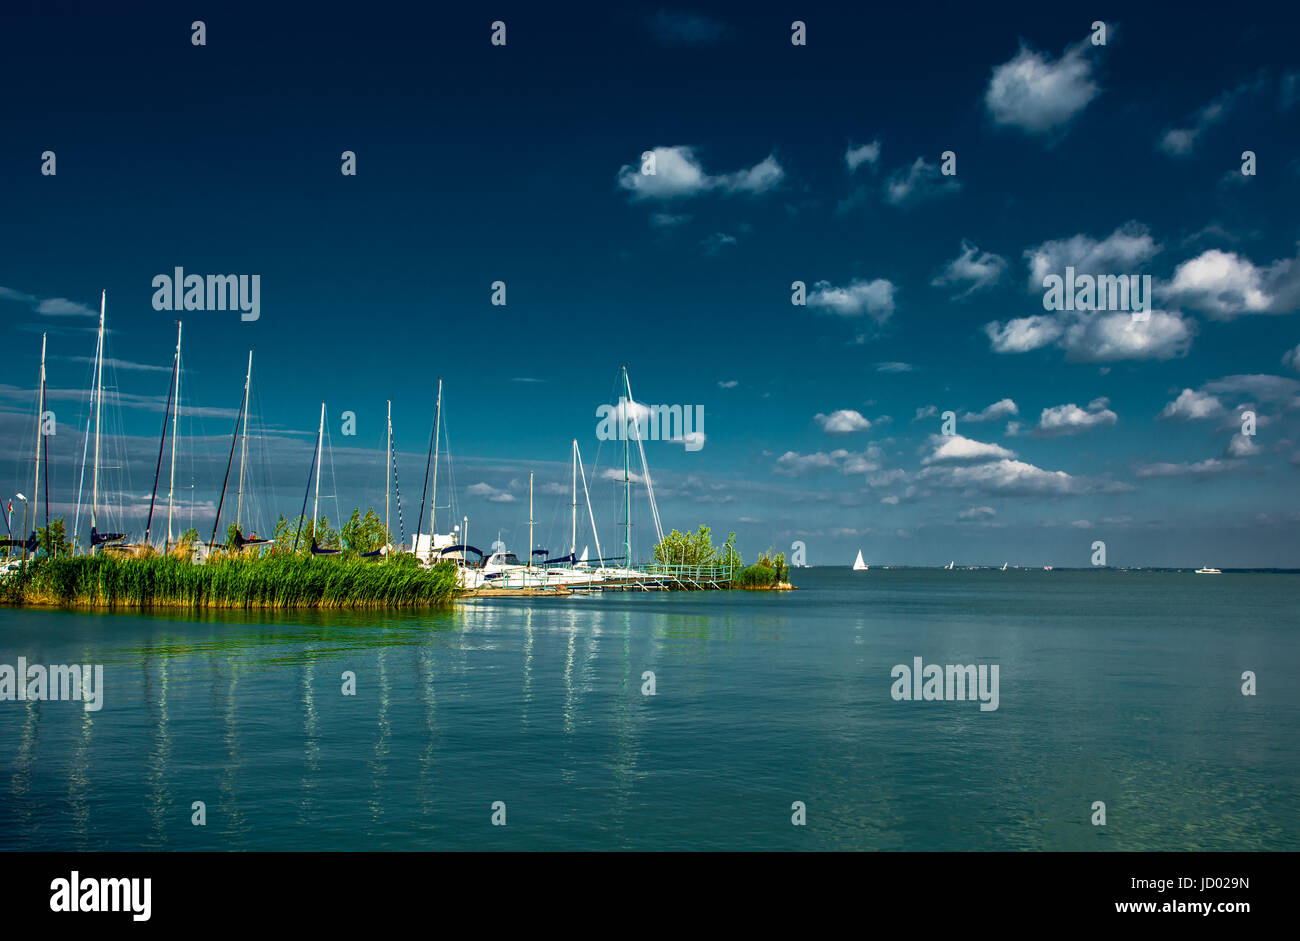 Sailboats in Harbor at Lake Balaton in Hungary Stock Photo